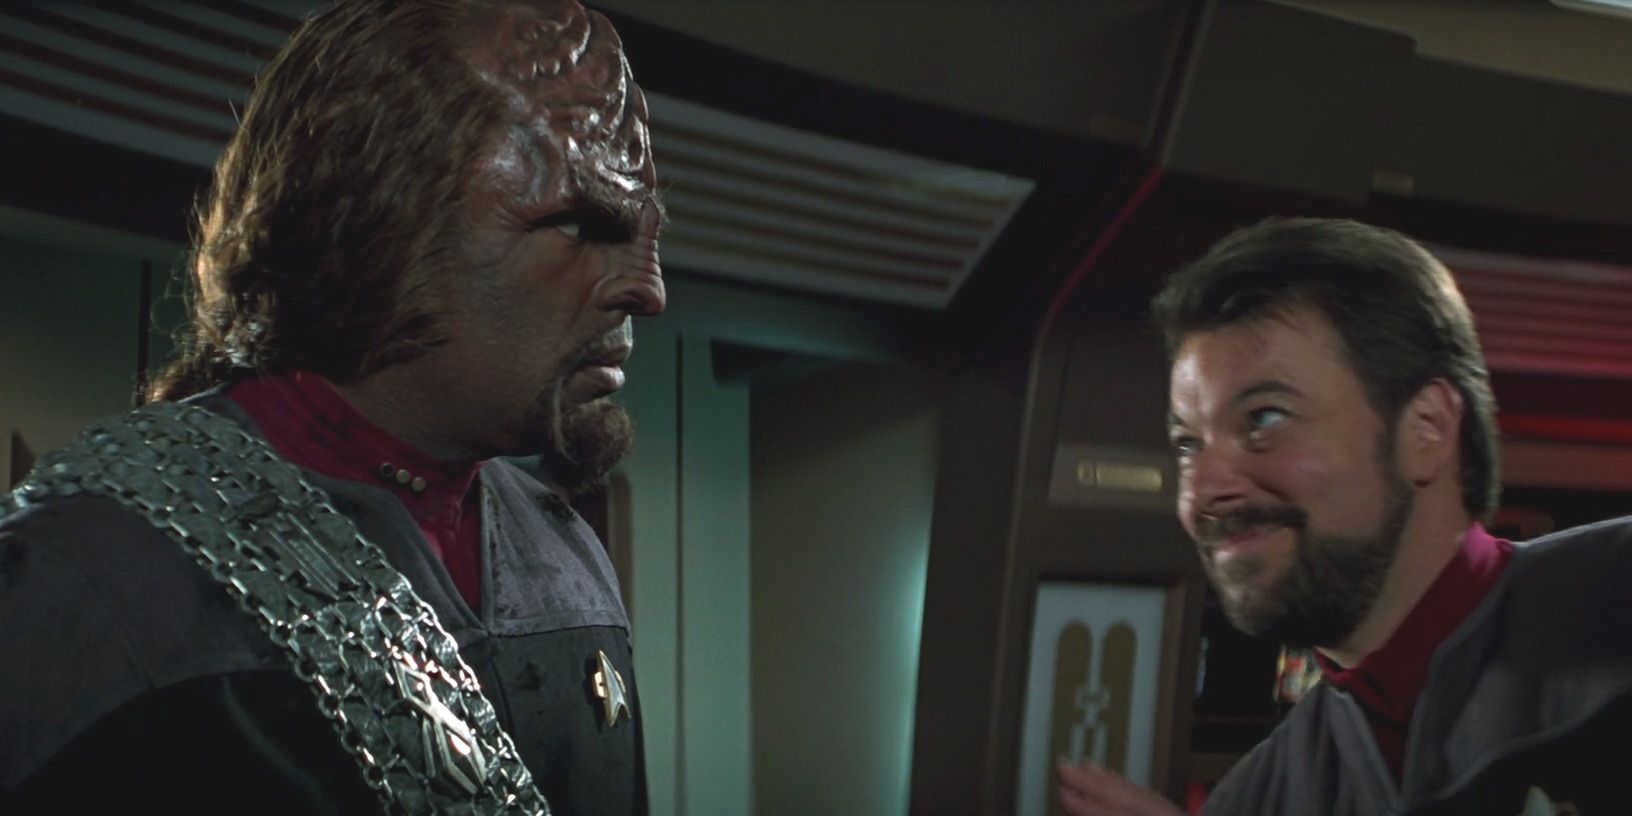 Klingon death stare